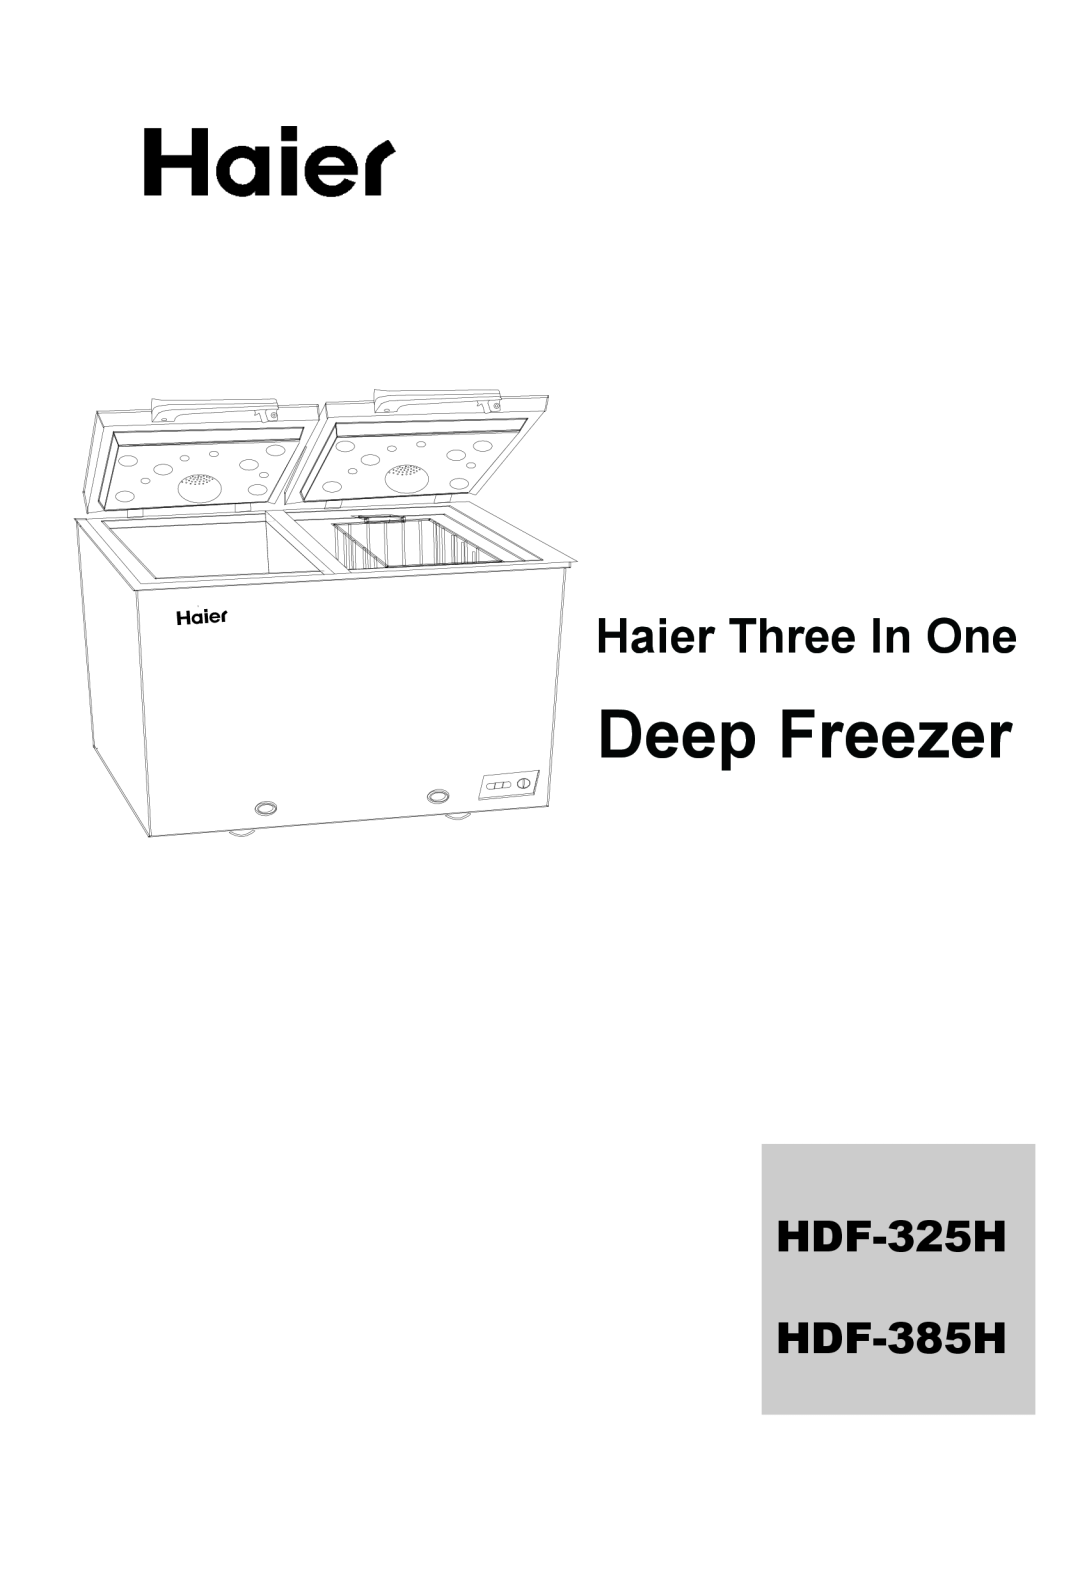 Hitachi manual Deep Freezer, Haier Three In One, HDF-325H HDF-385H 